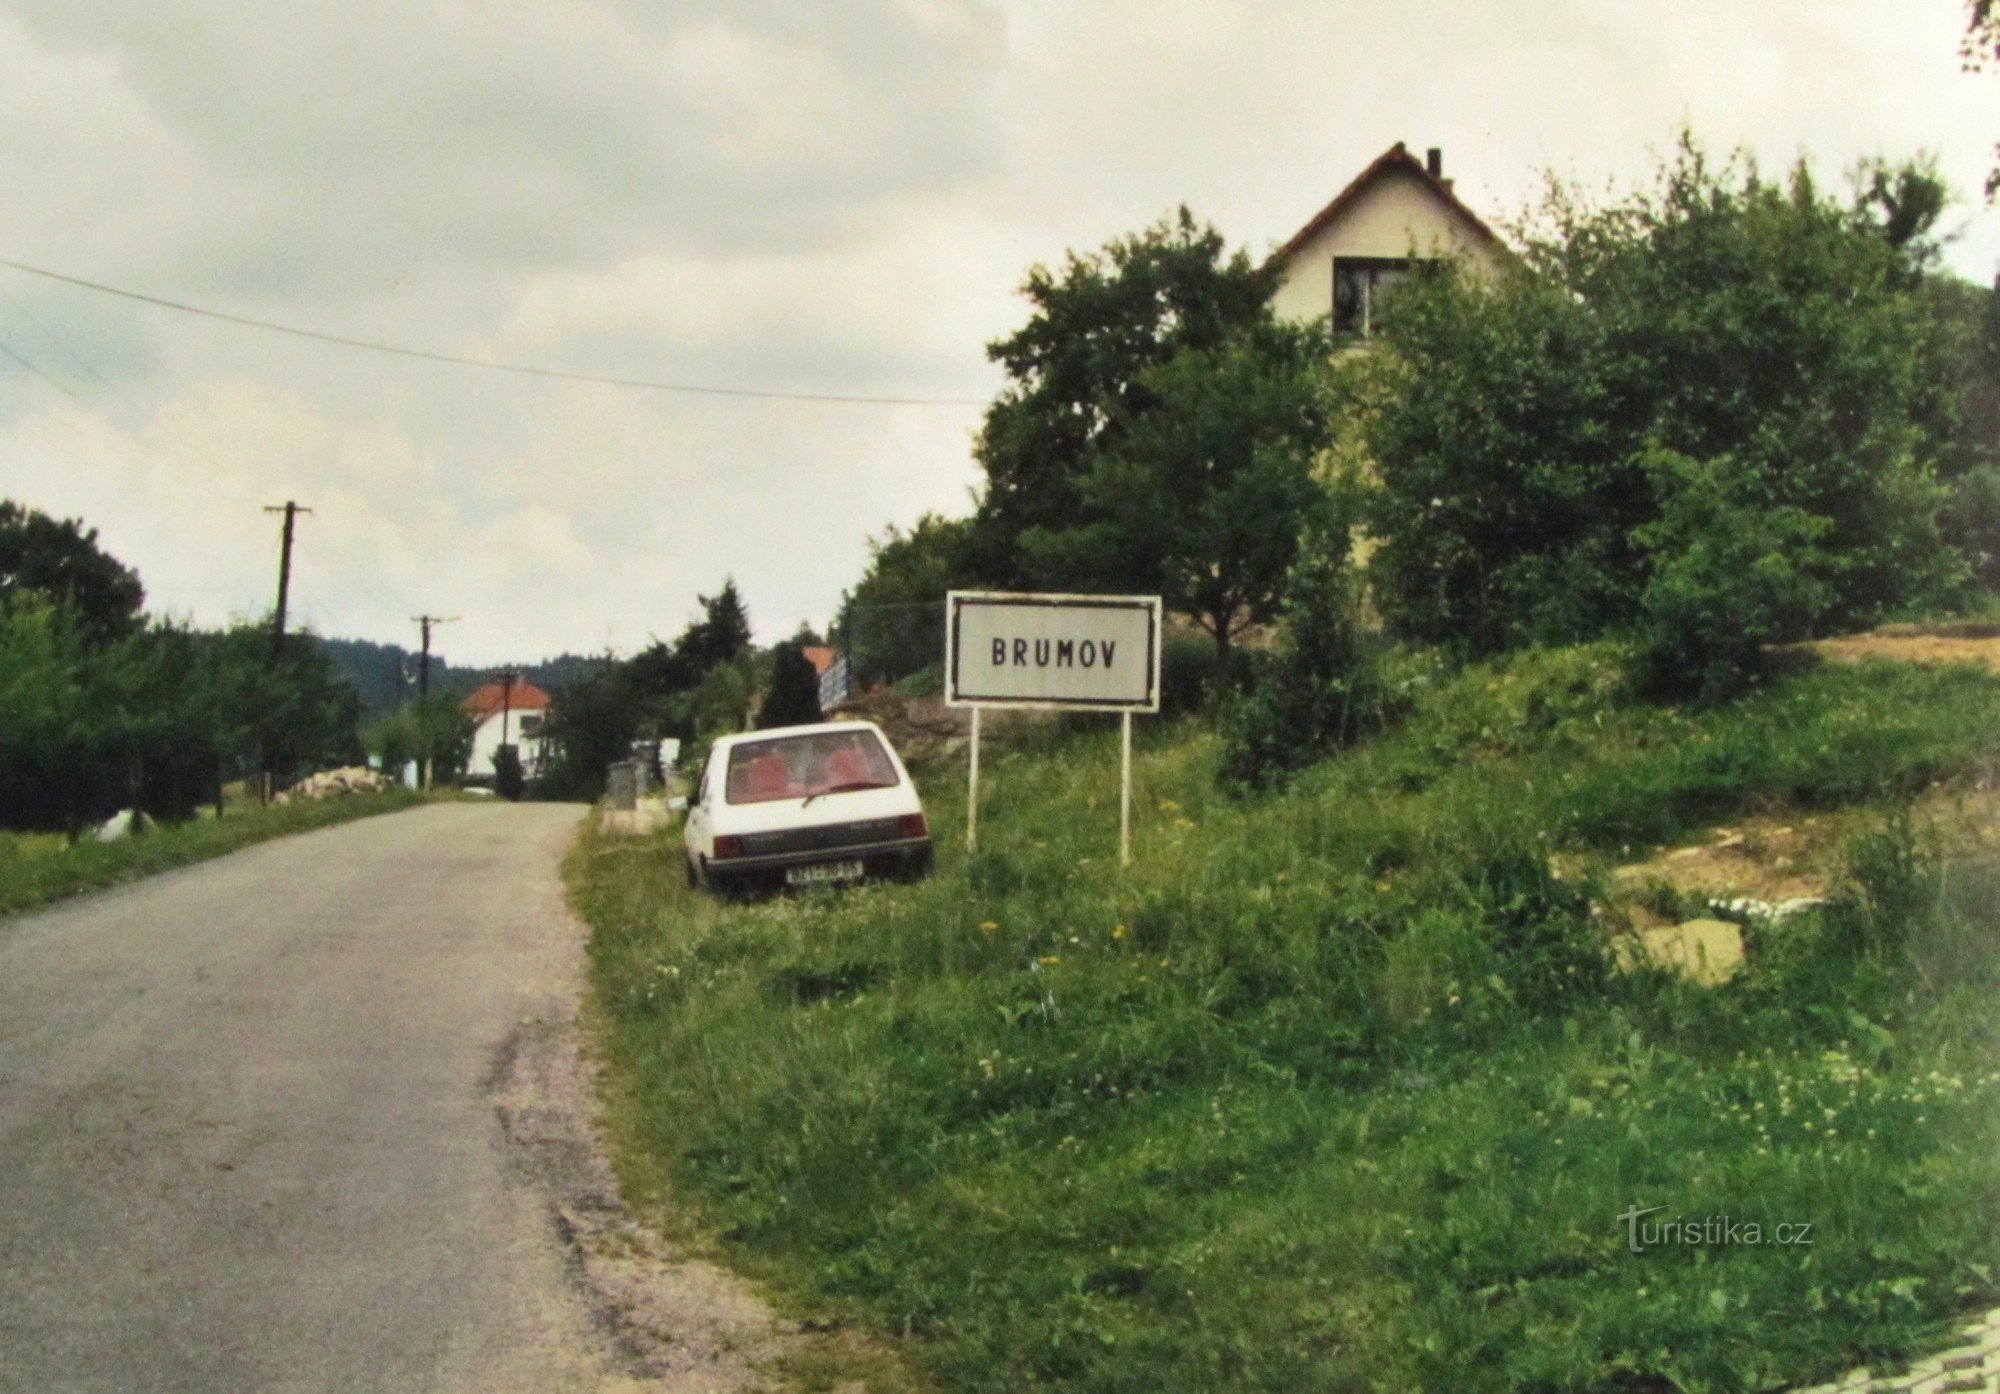 Journey to the Highlands - 3. From Lysice to Brumov, Osik, Synalova and to Sýkoř - retro 2001